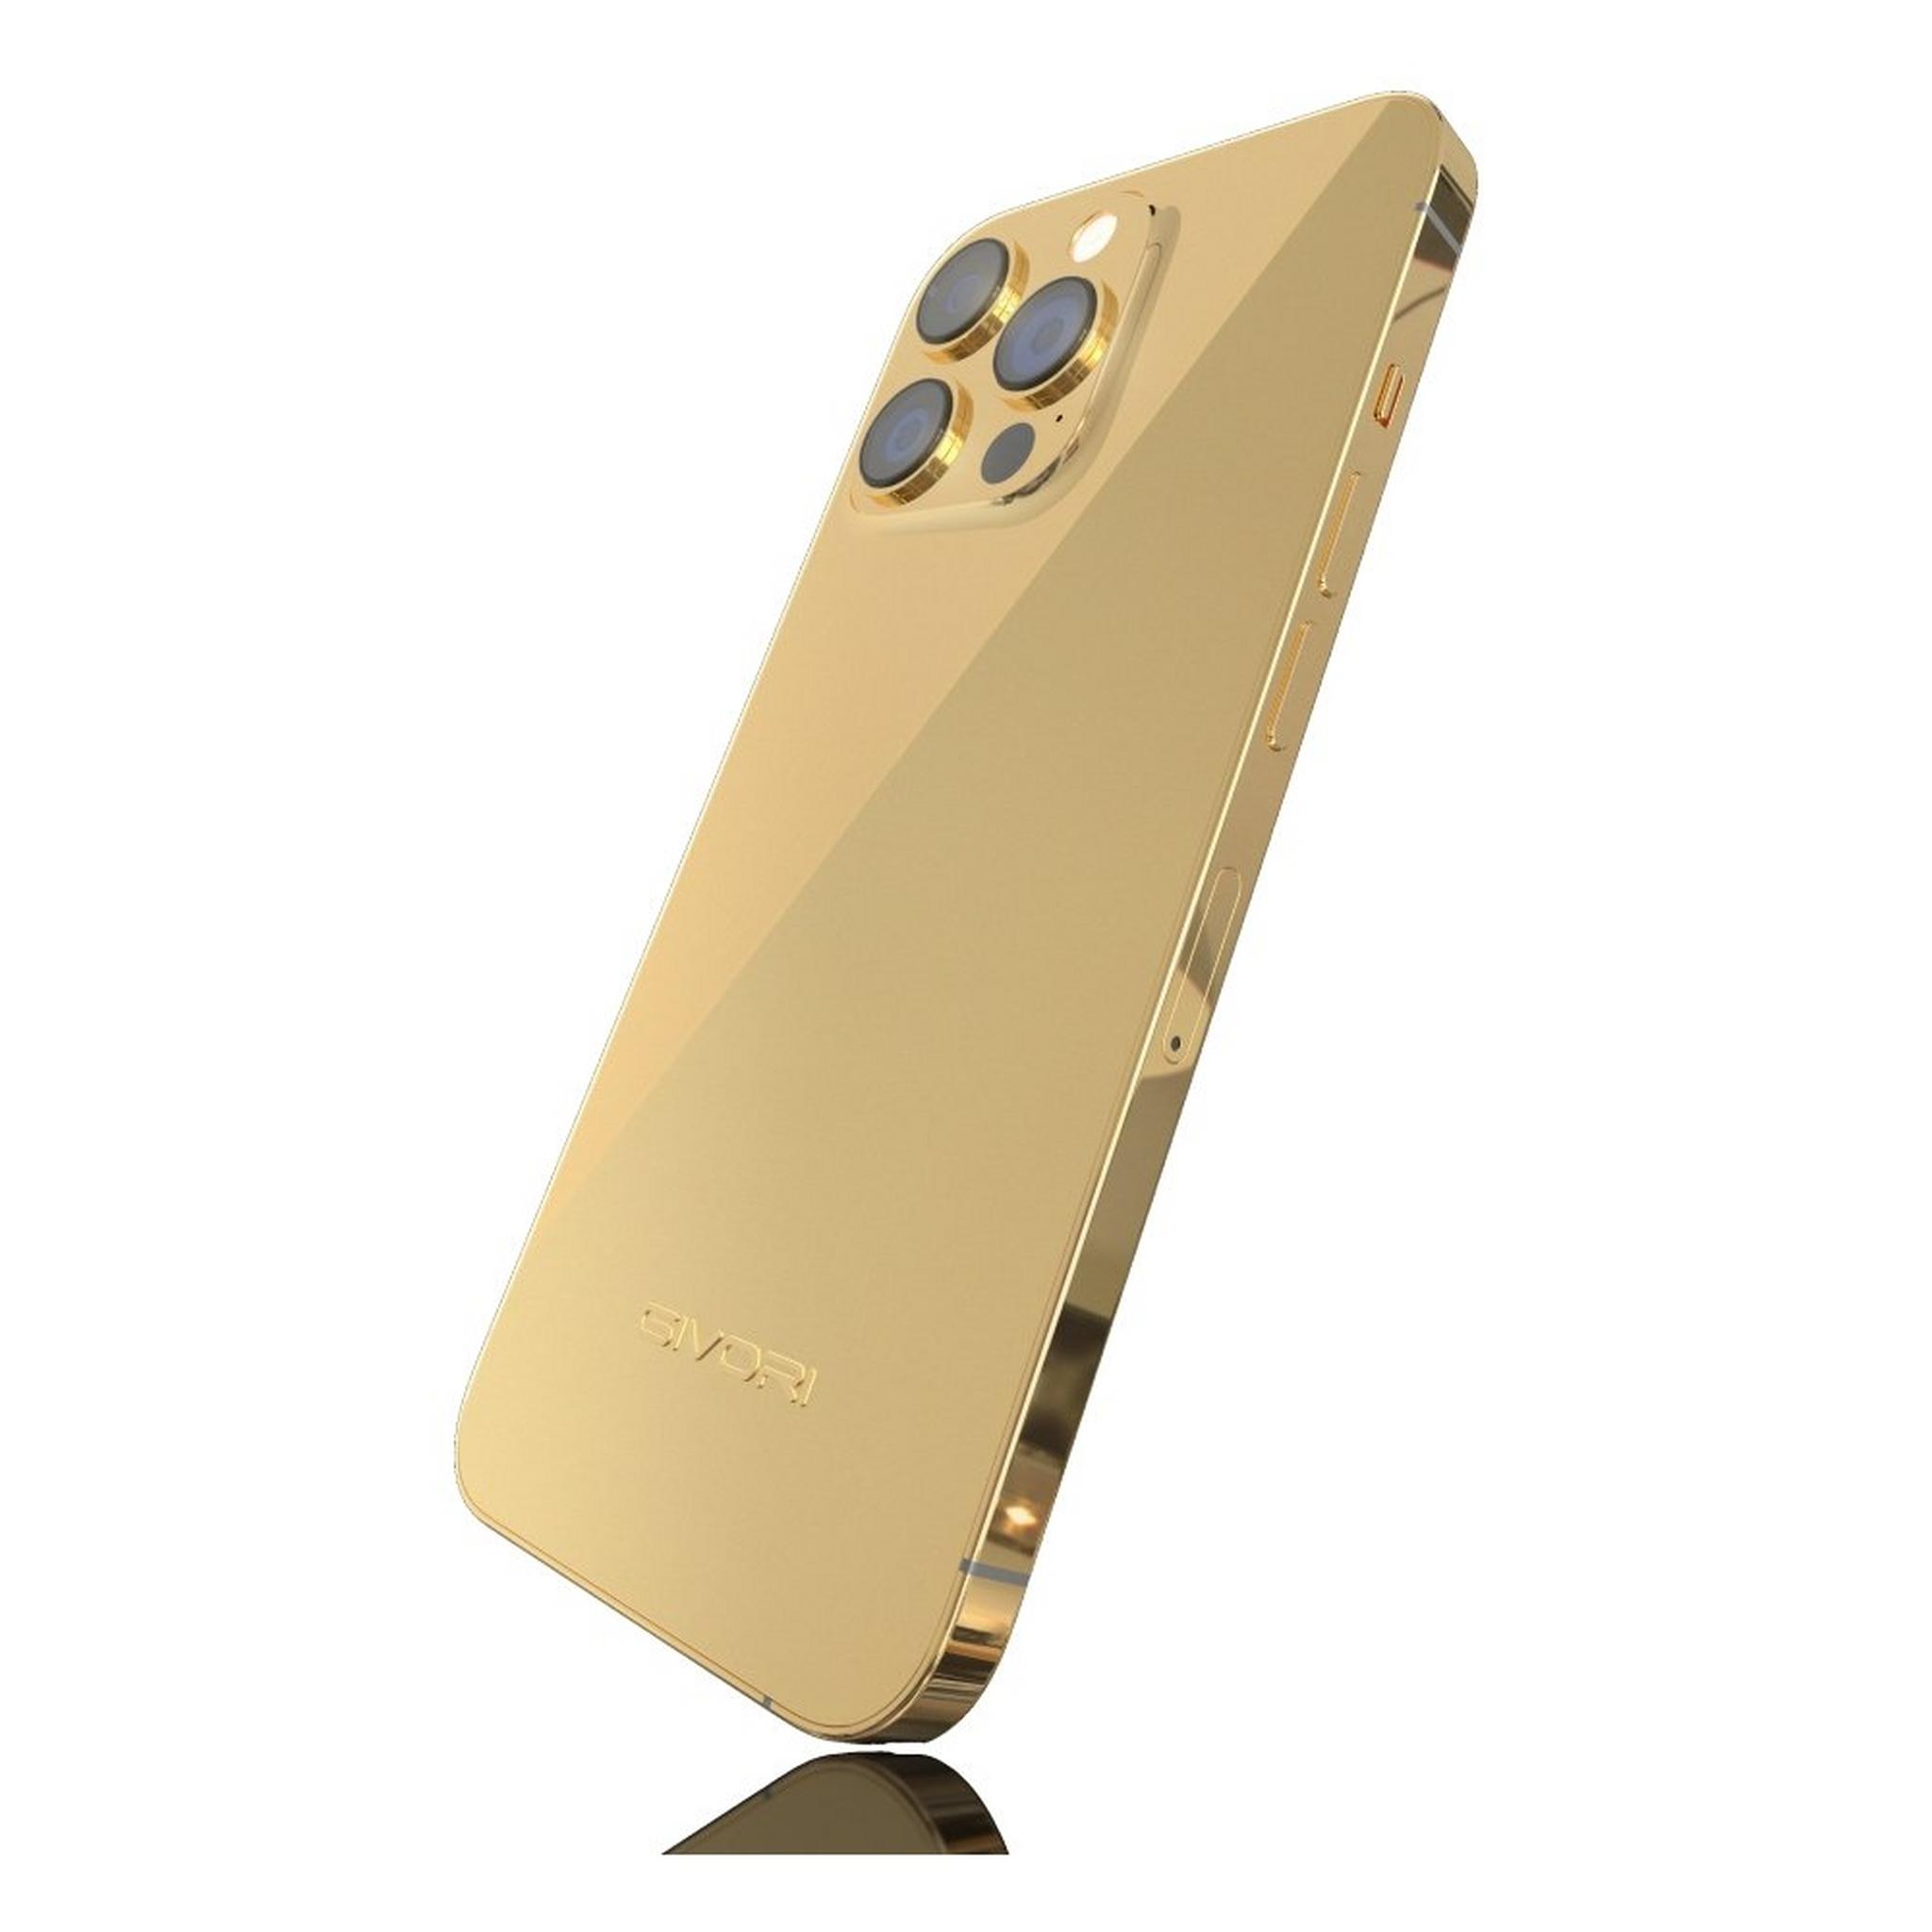 Givori iPhone 13 Pro Max 256GB Full Gold Edition